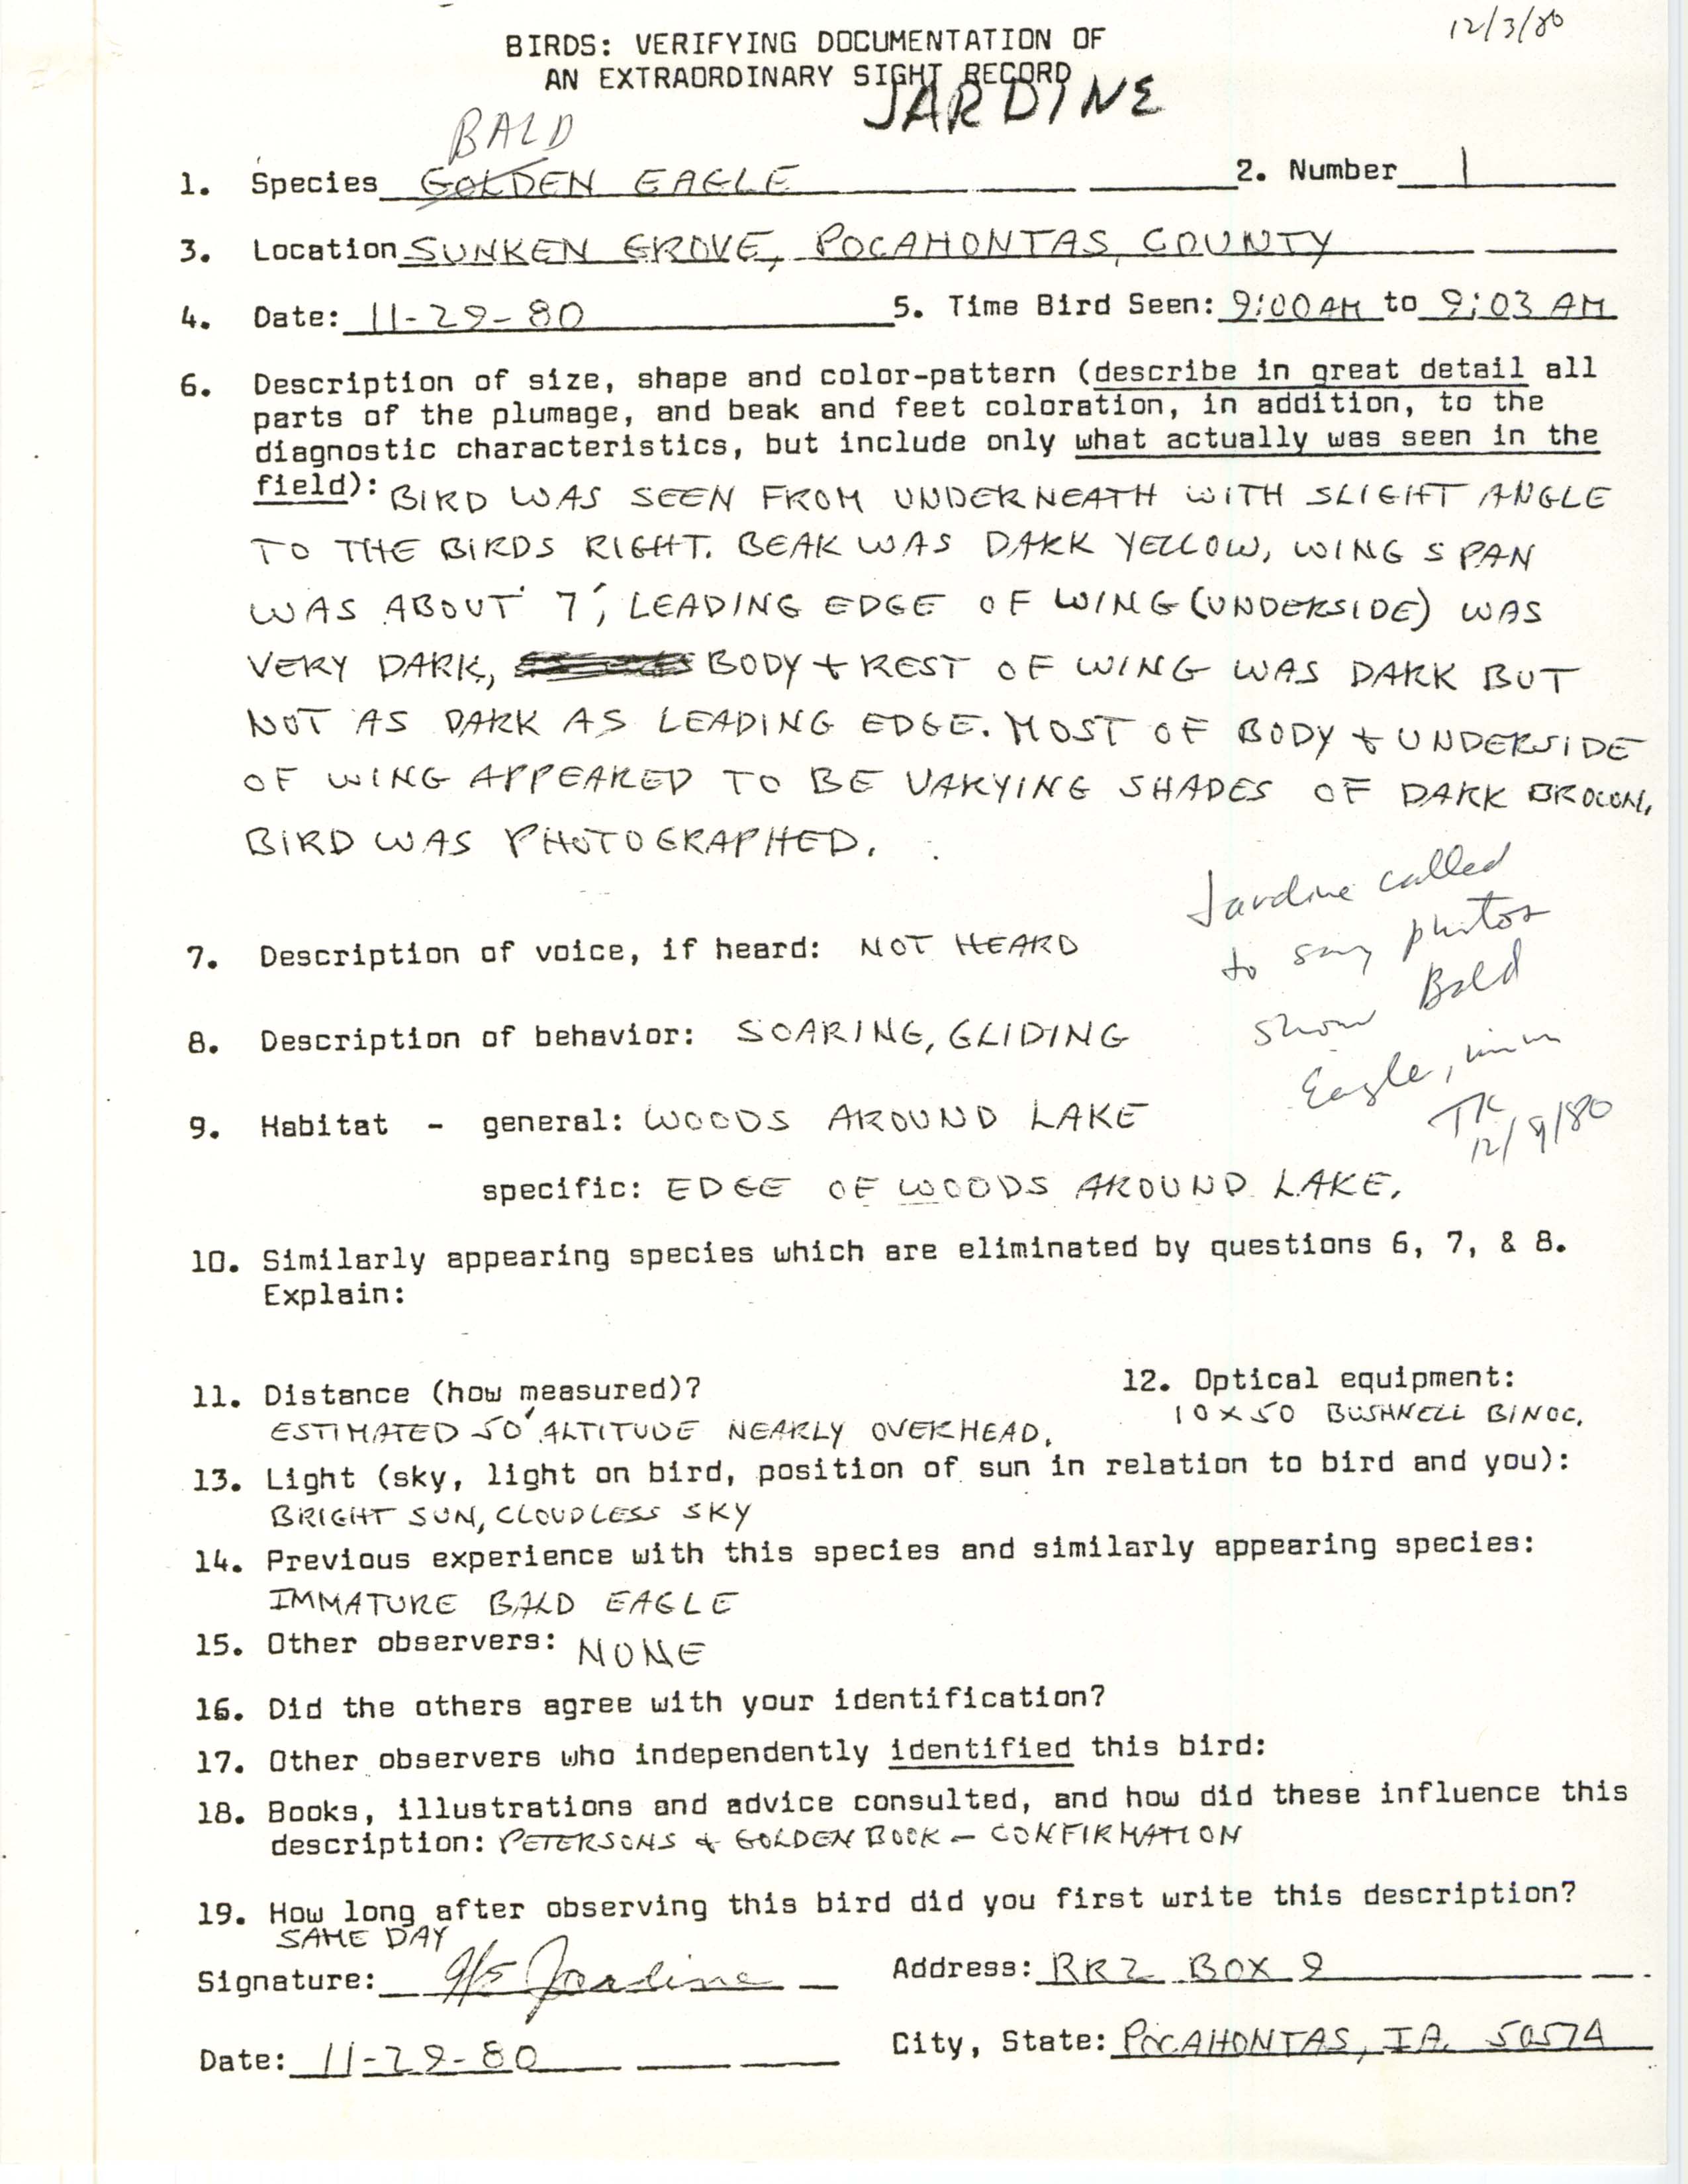 Rare bird documentation form for Bald Eagle at Sunken Grove, 1980